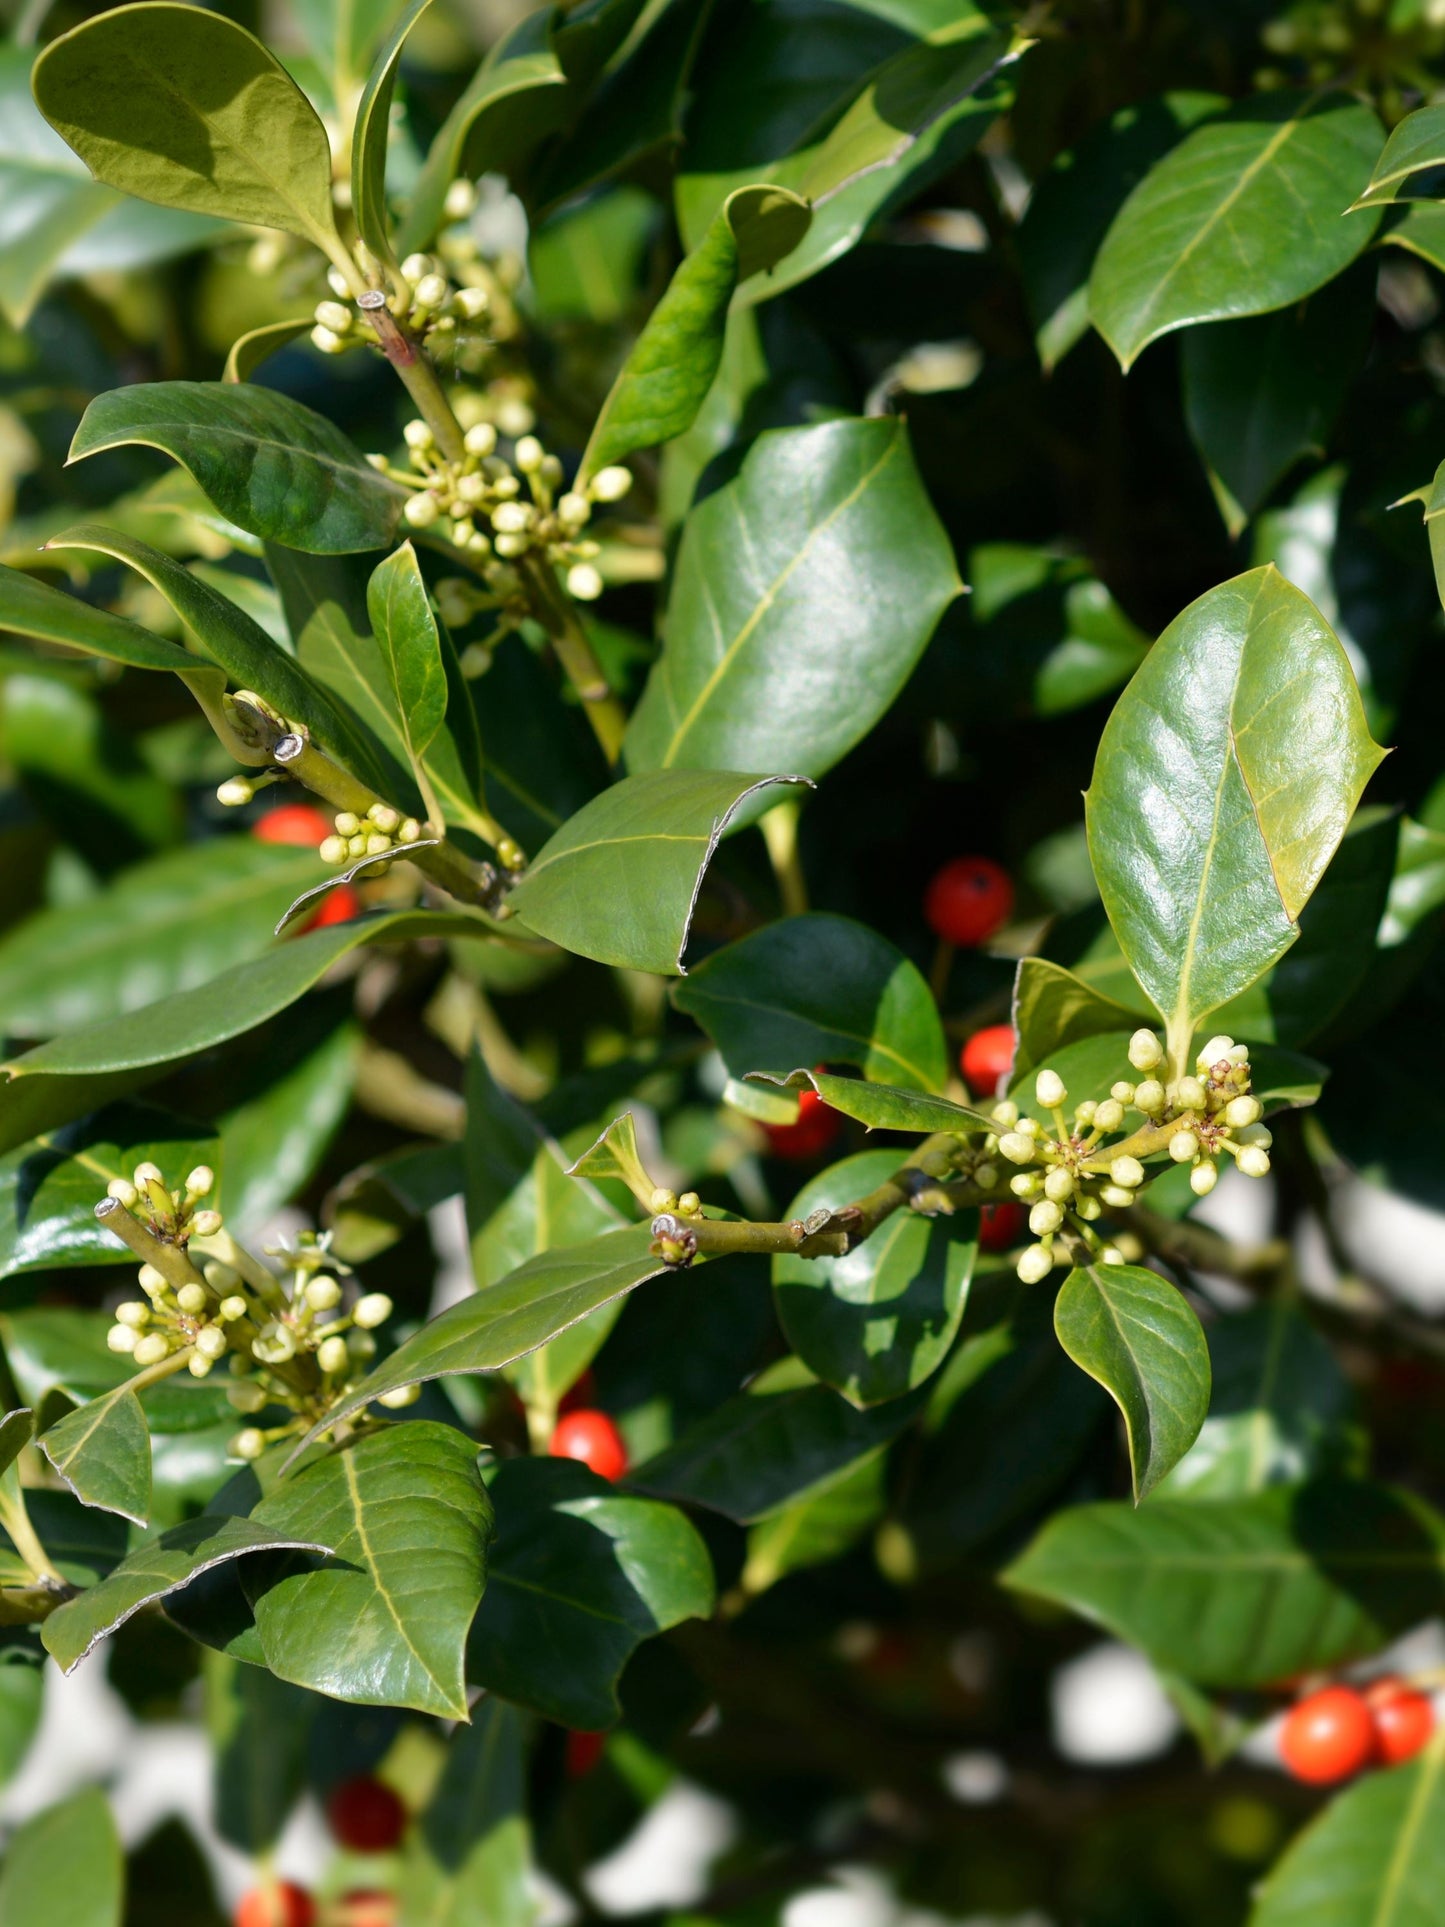 Close-up of foliage